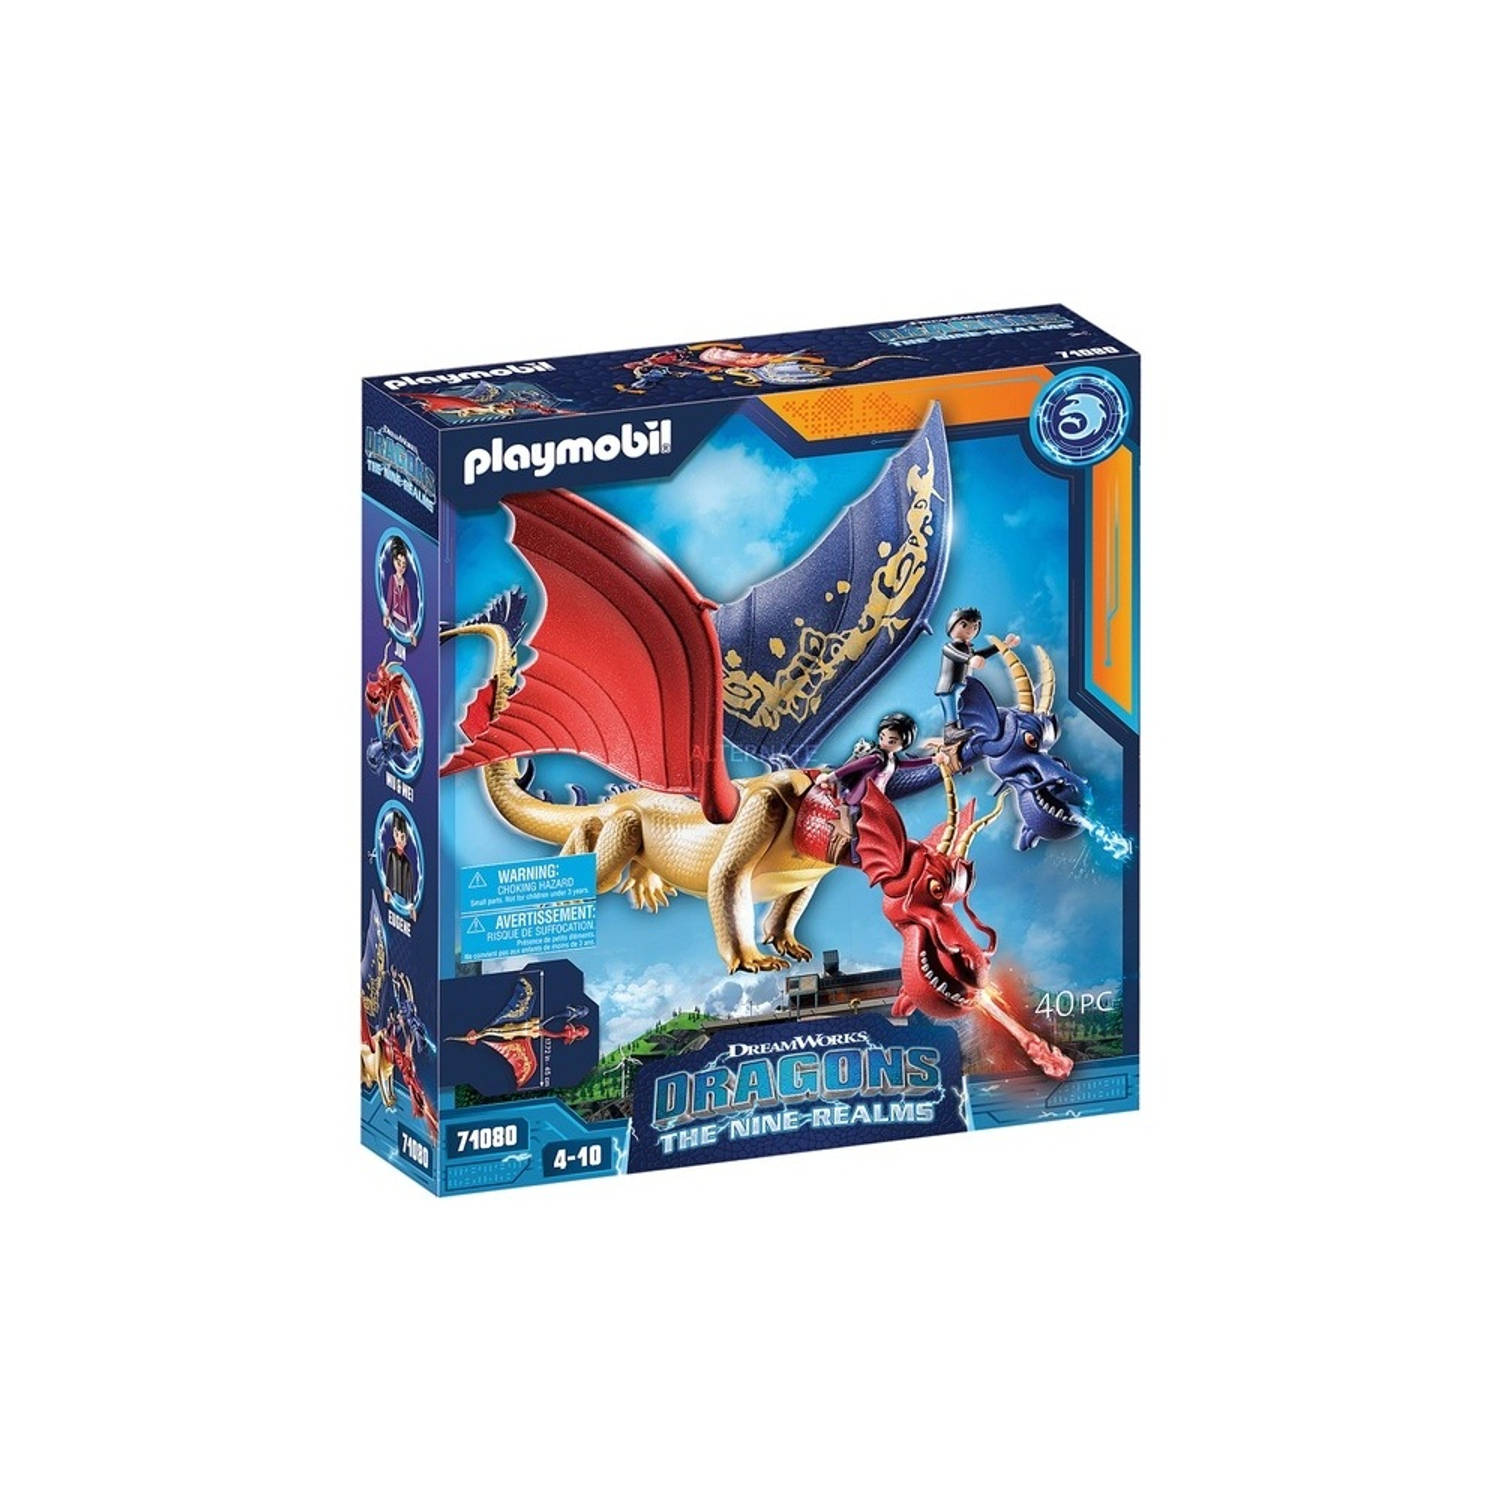 Playmobil® Constructie-speelset Dragons: The Nine Realms Wu & Wei mit Jun (71080) (40 stuks)